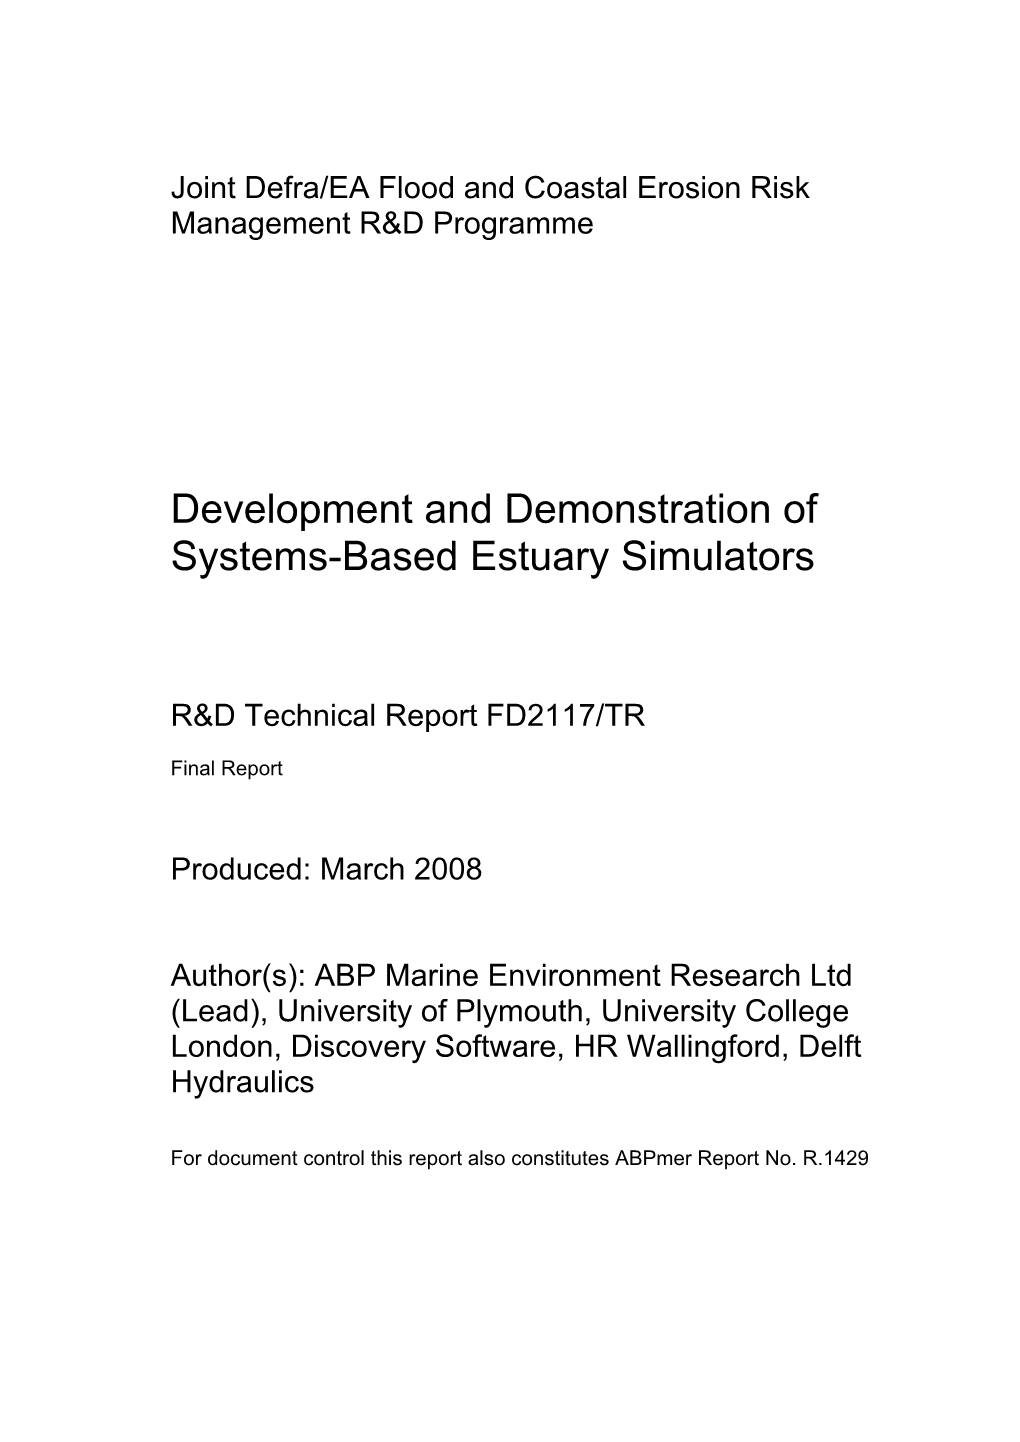 R&D Technical Report FD2117/TR